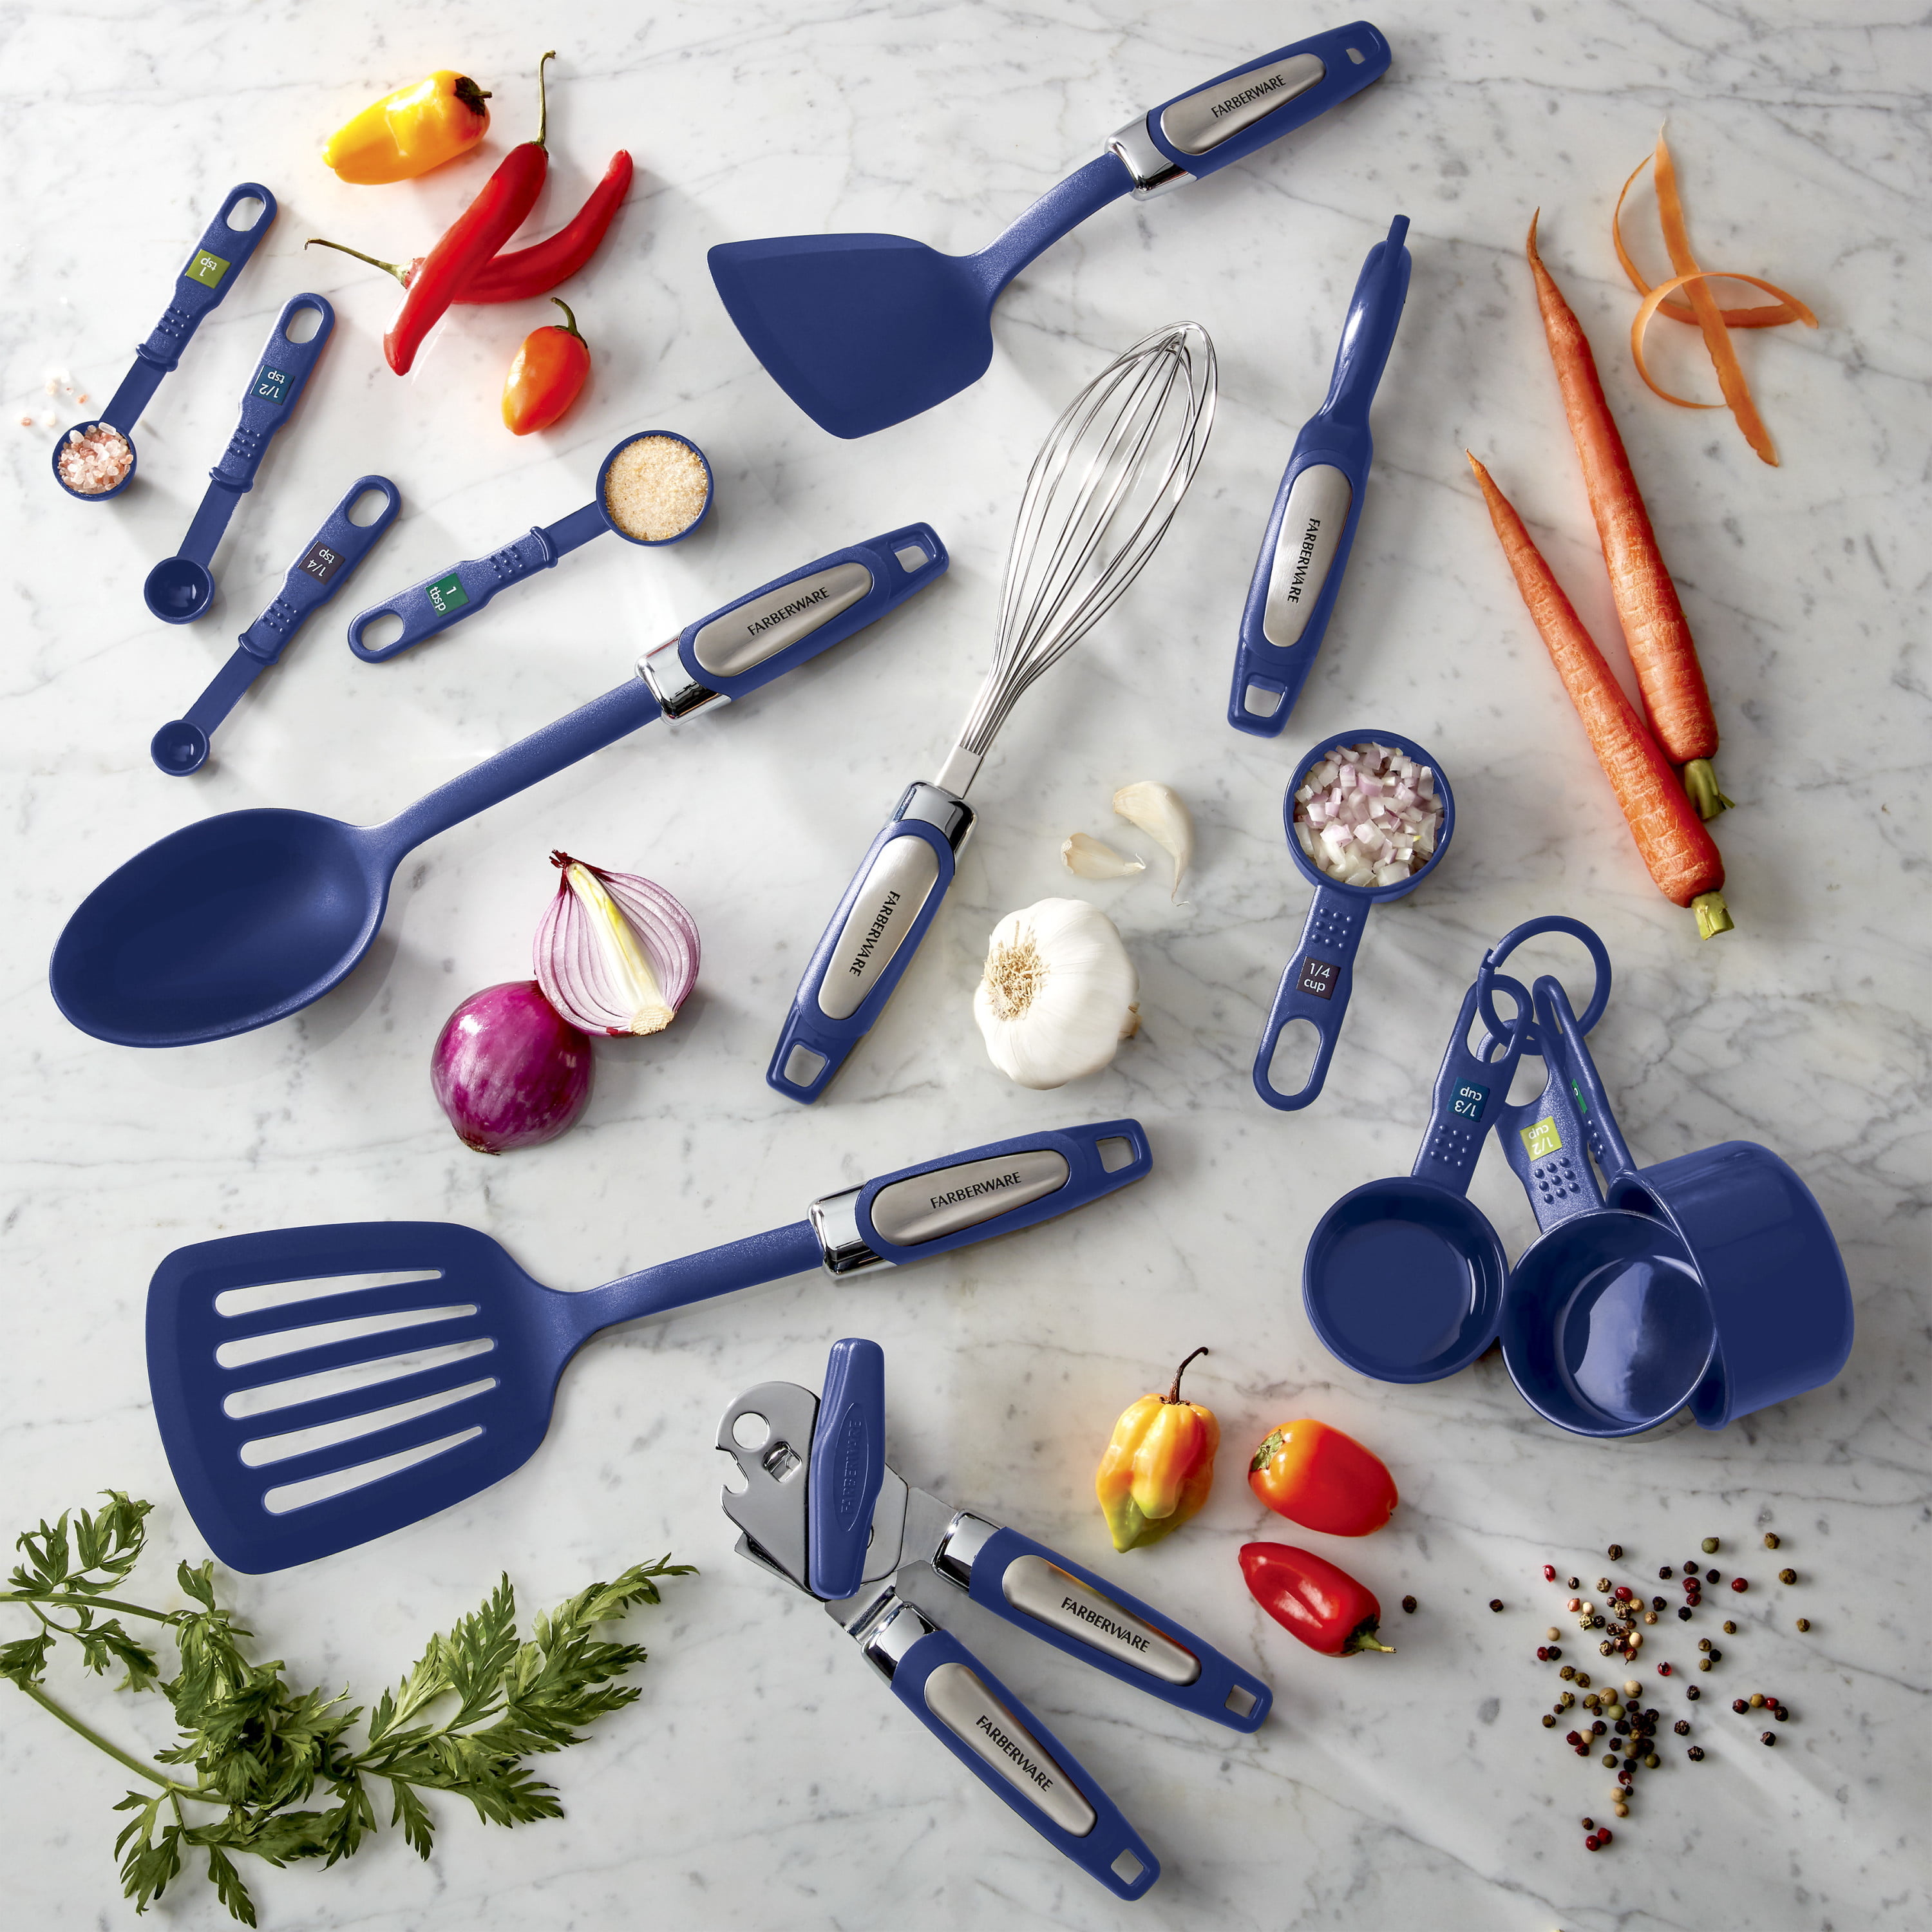 Farberware 22-piece Essential Kitchen Tool and Gadget Set